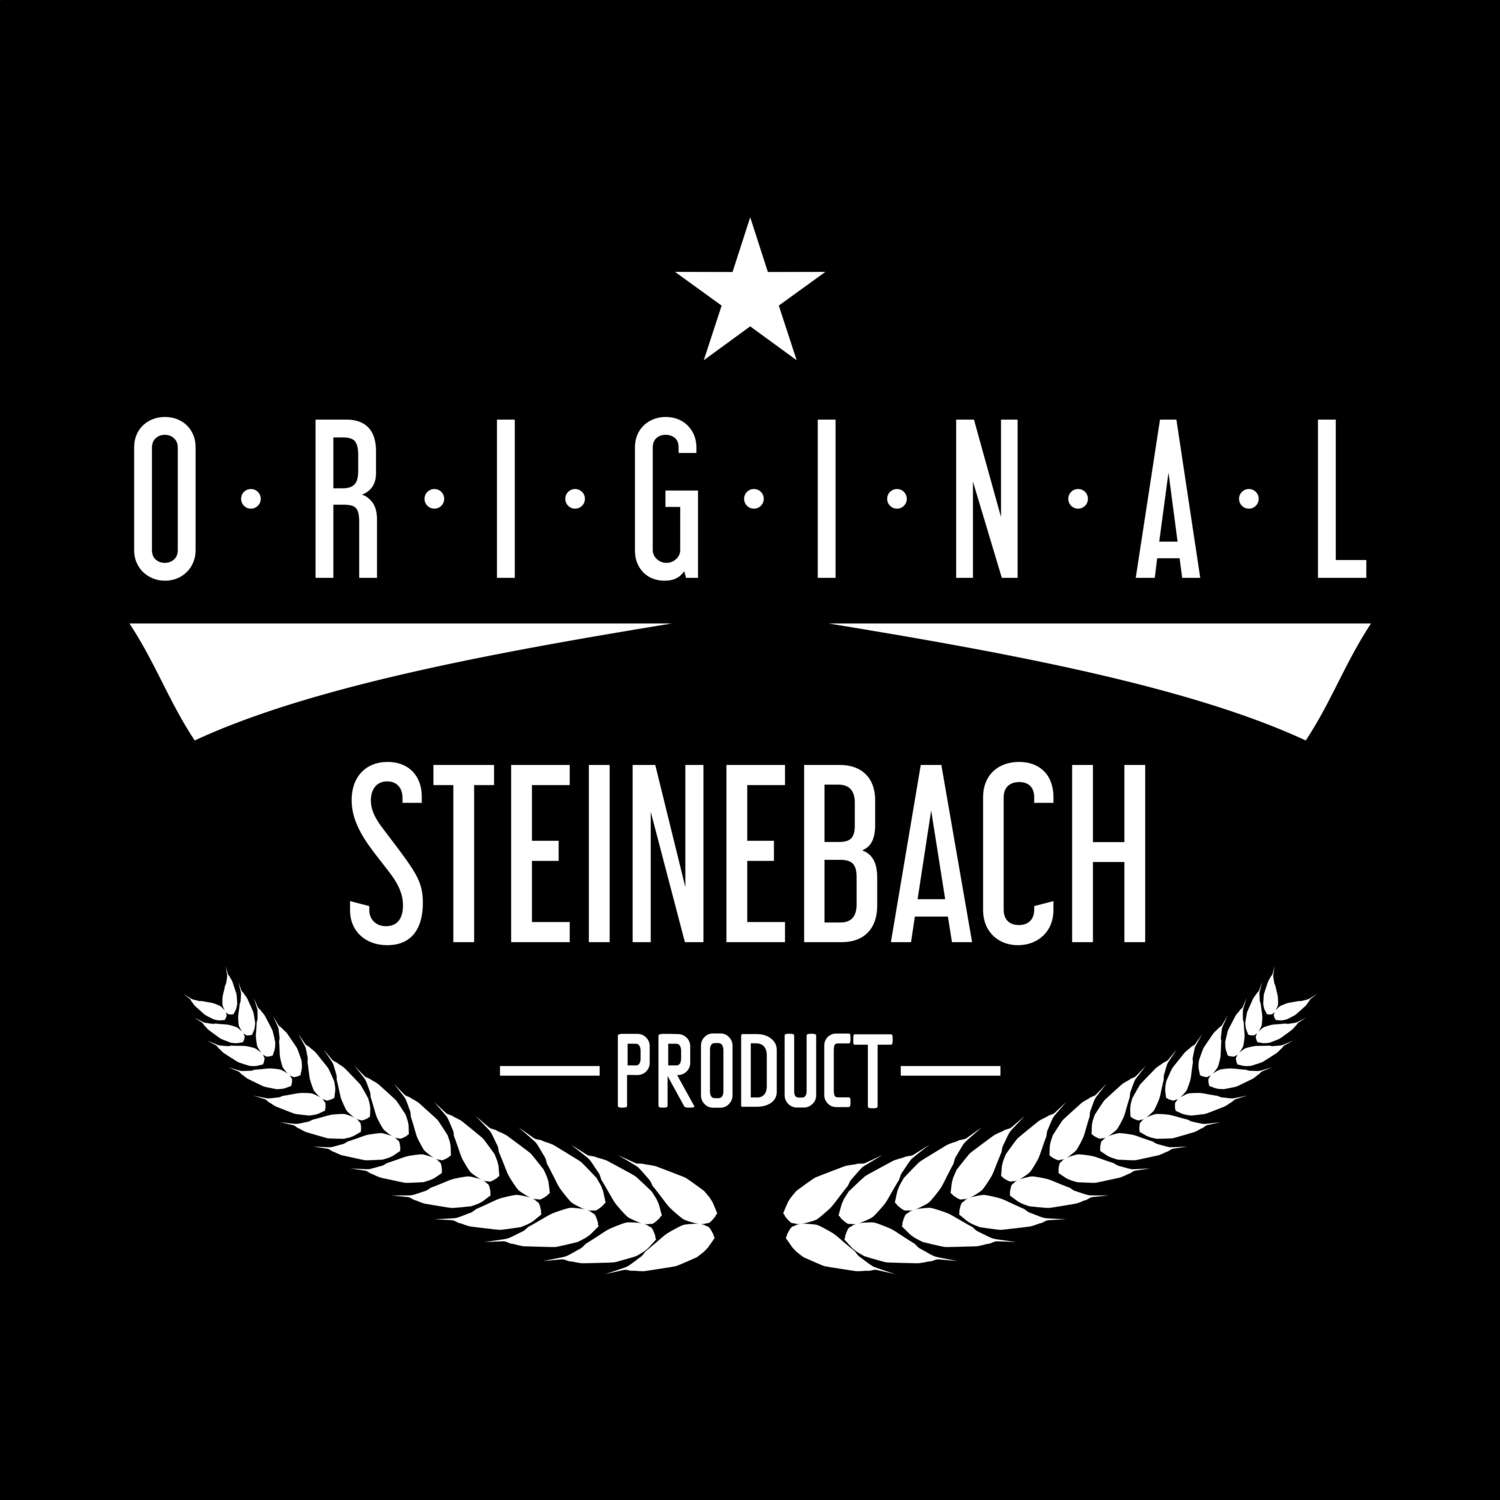 Steinebach T-Shirt »Original Product«